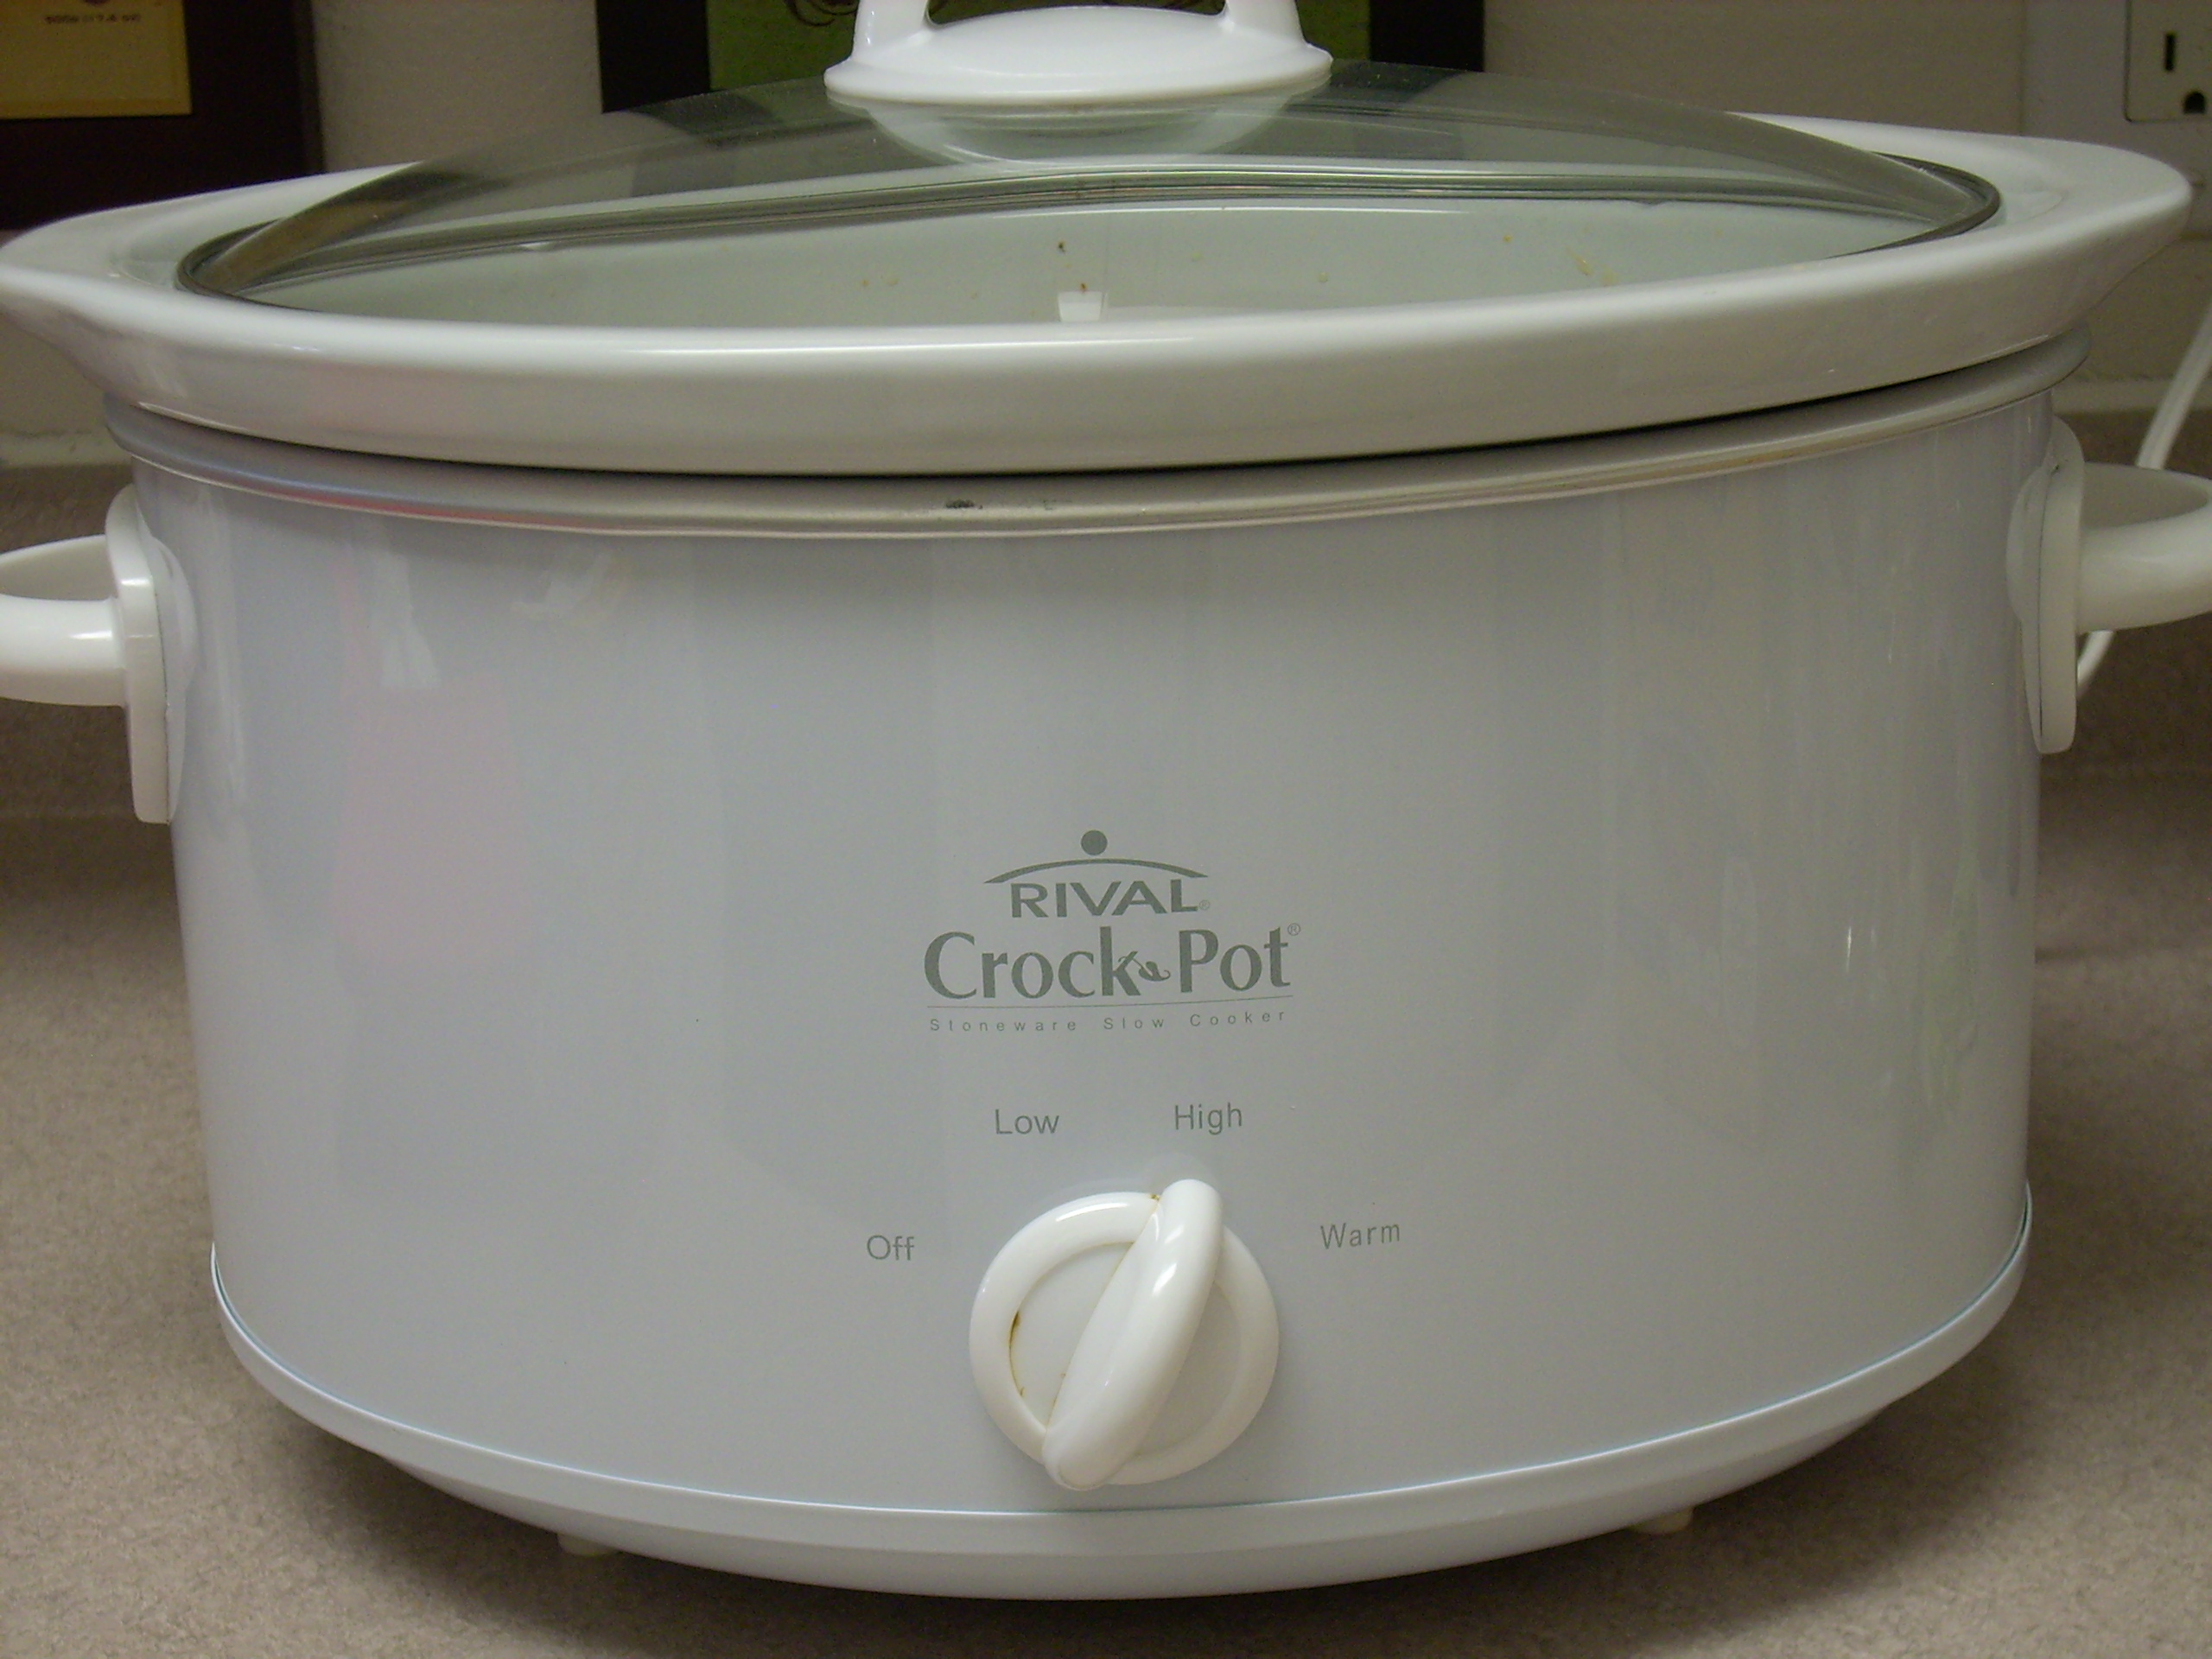 RIVAL Crockpot Model 37401